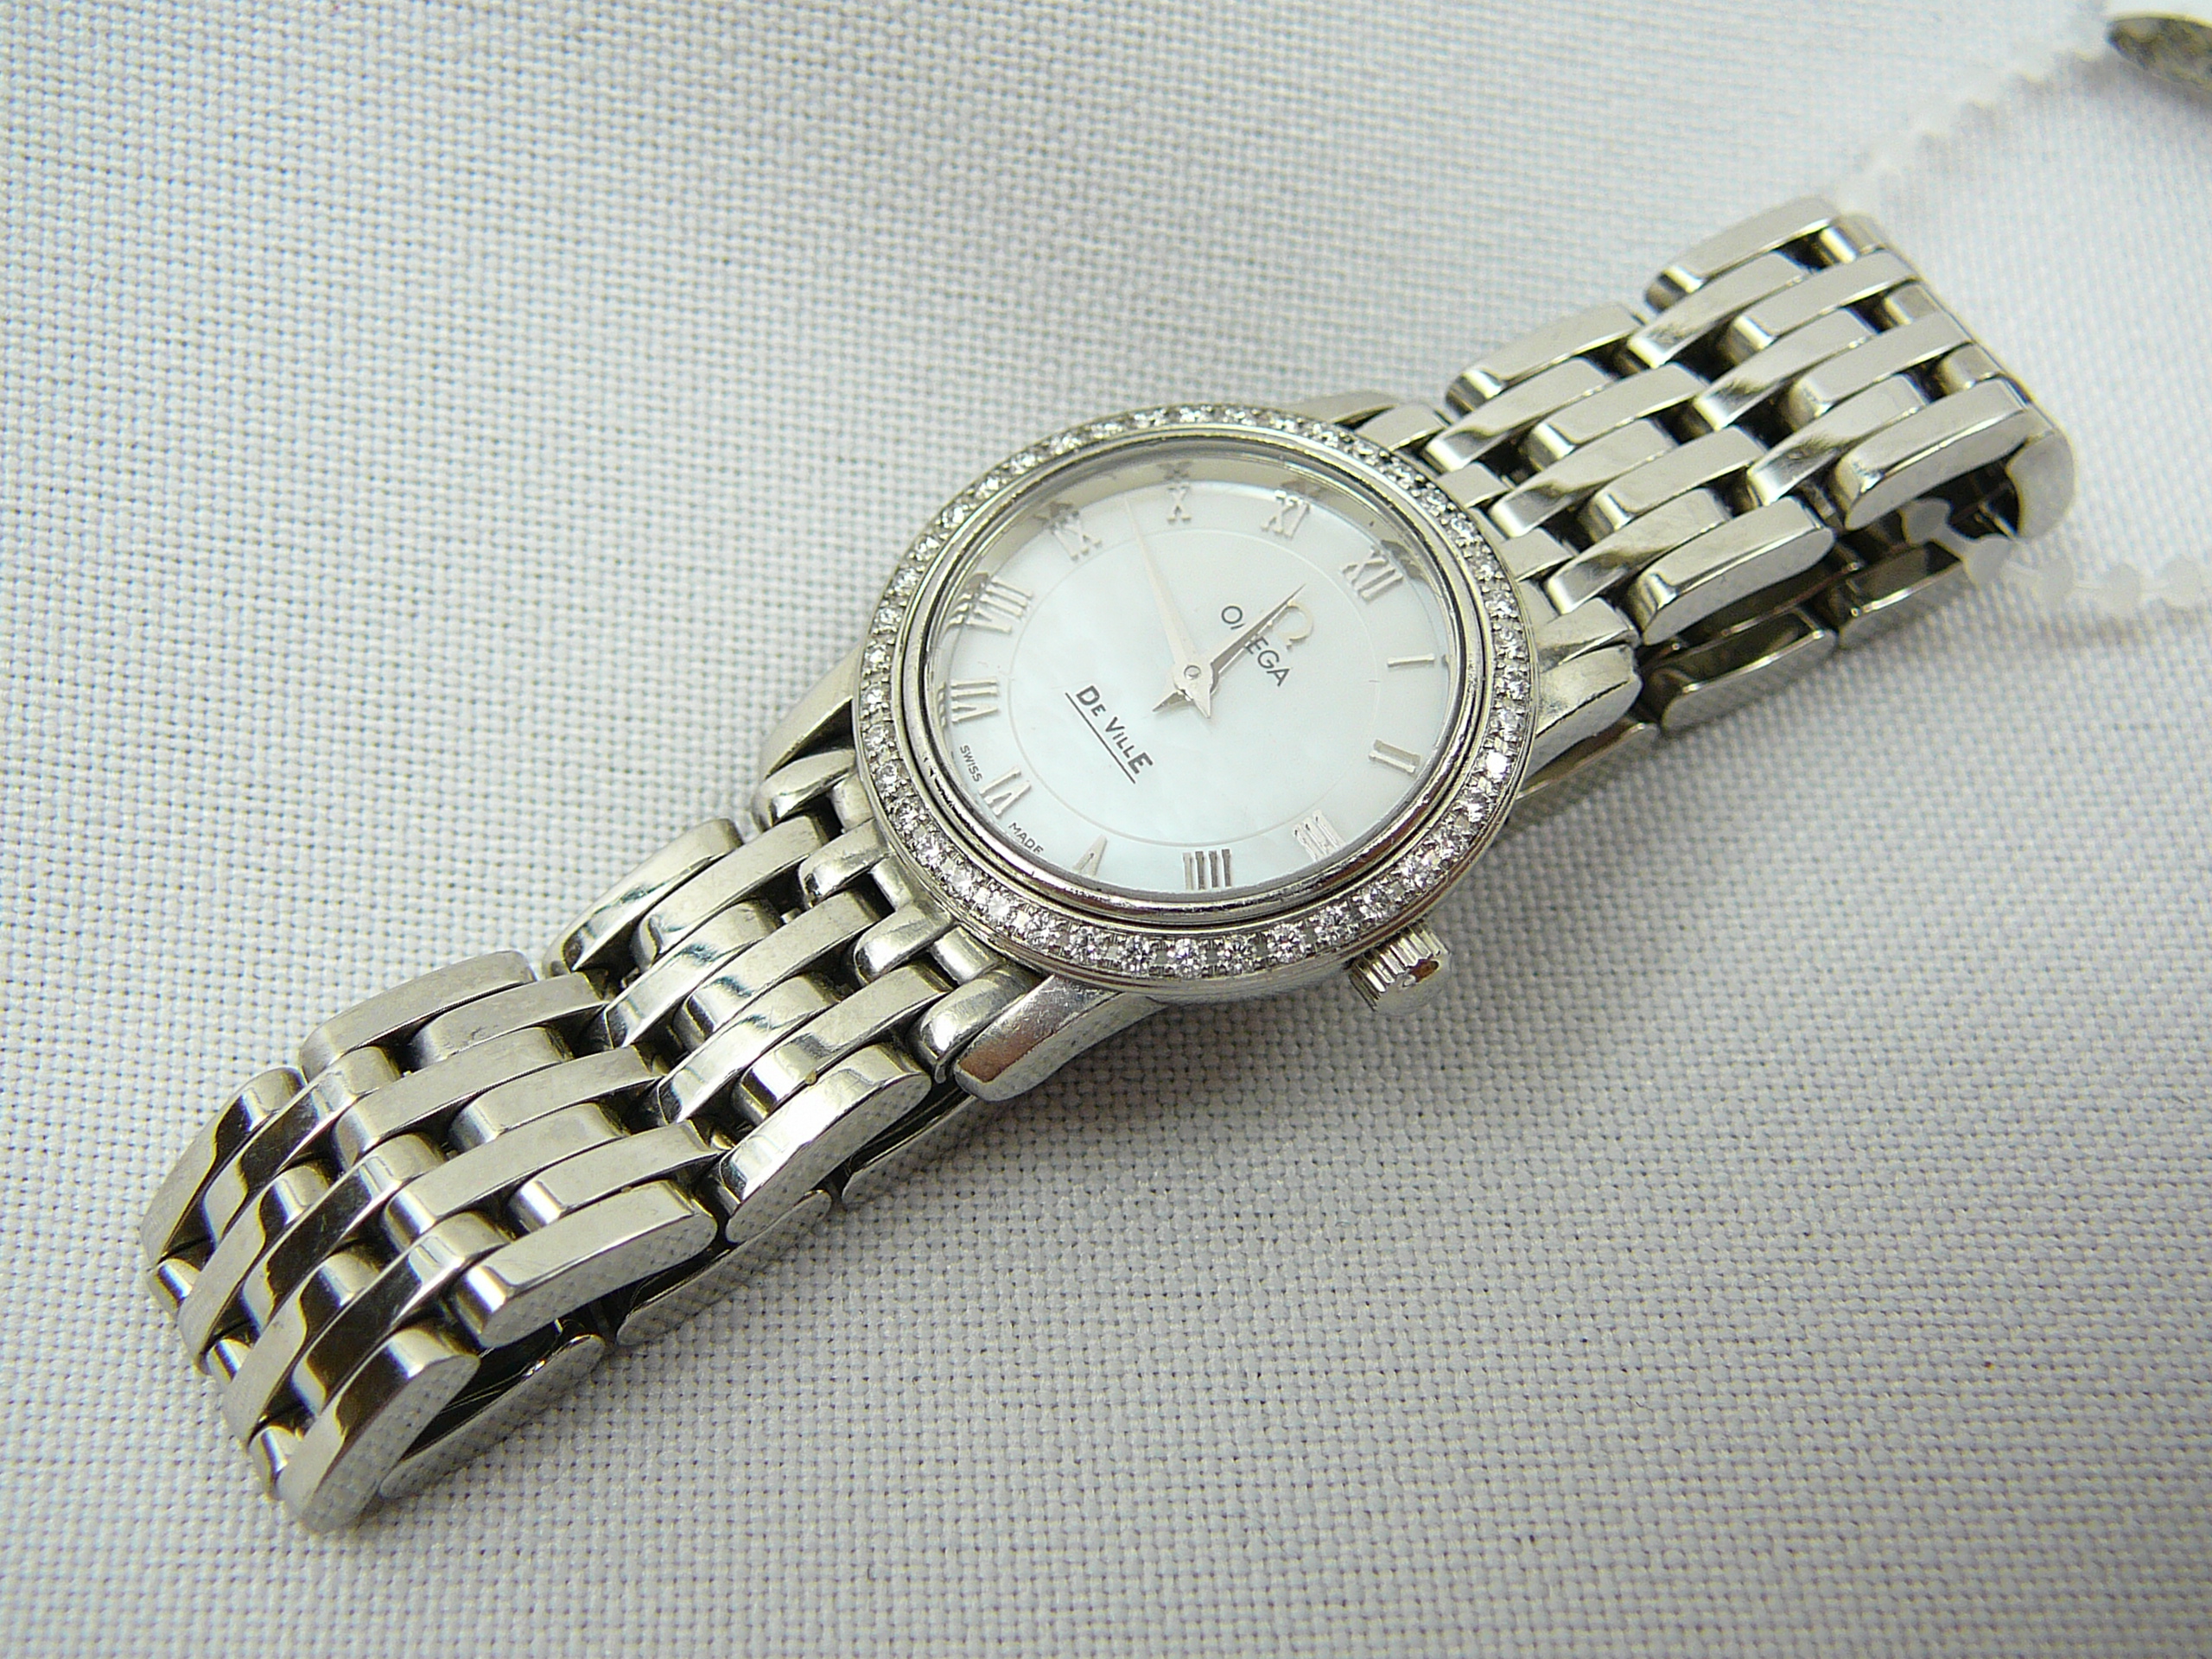 Ladies Omega wrist watch